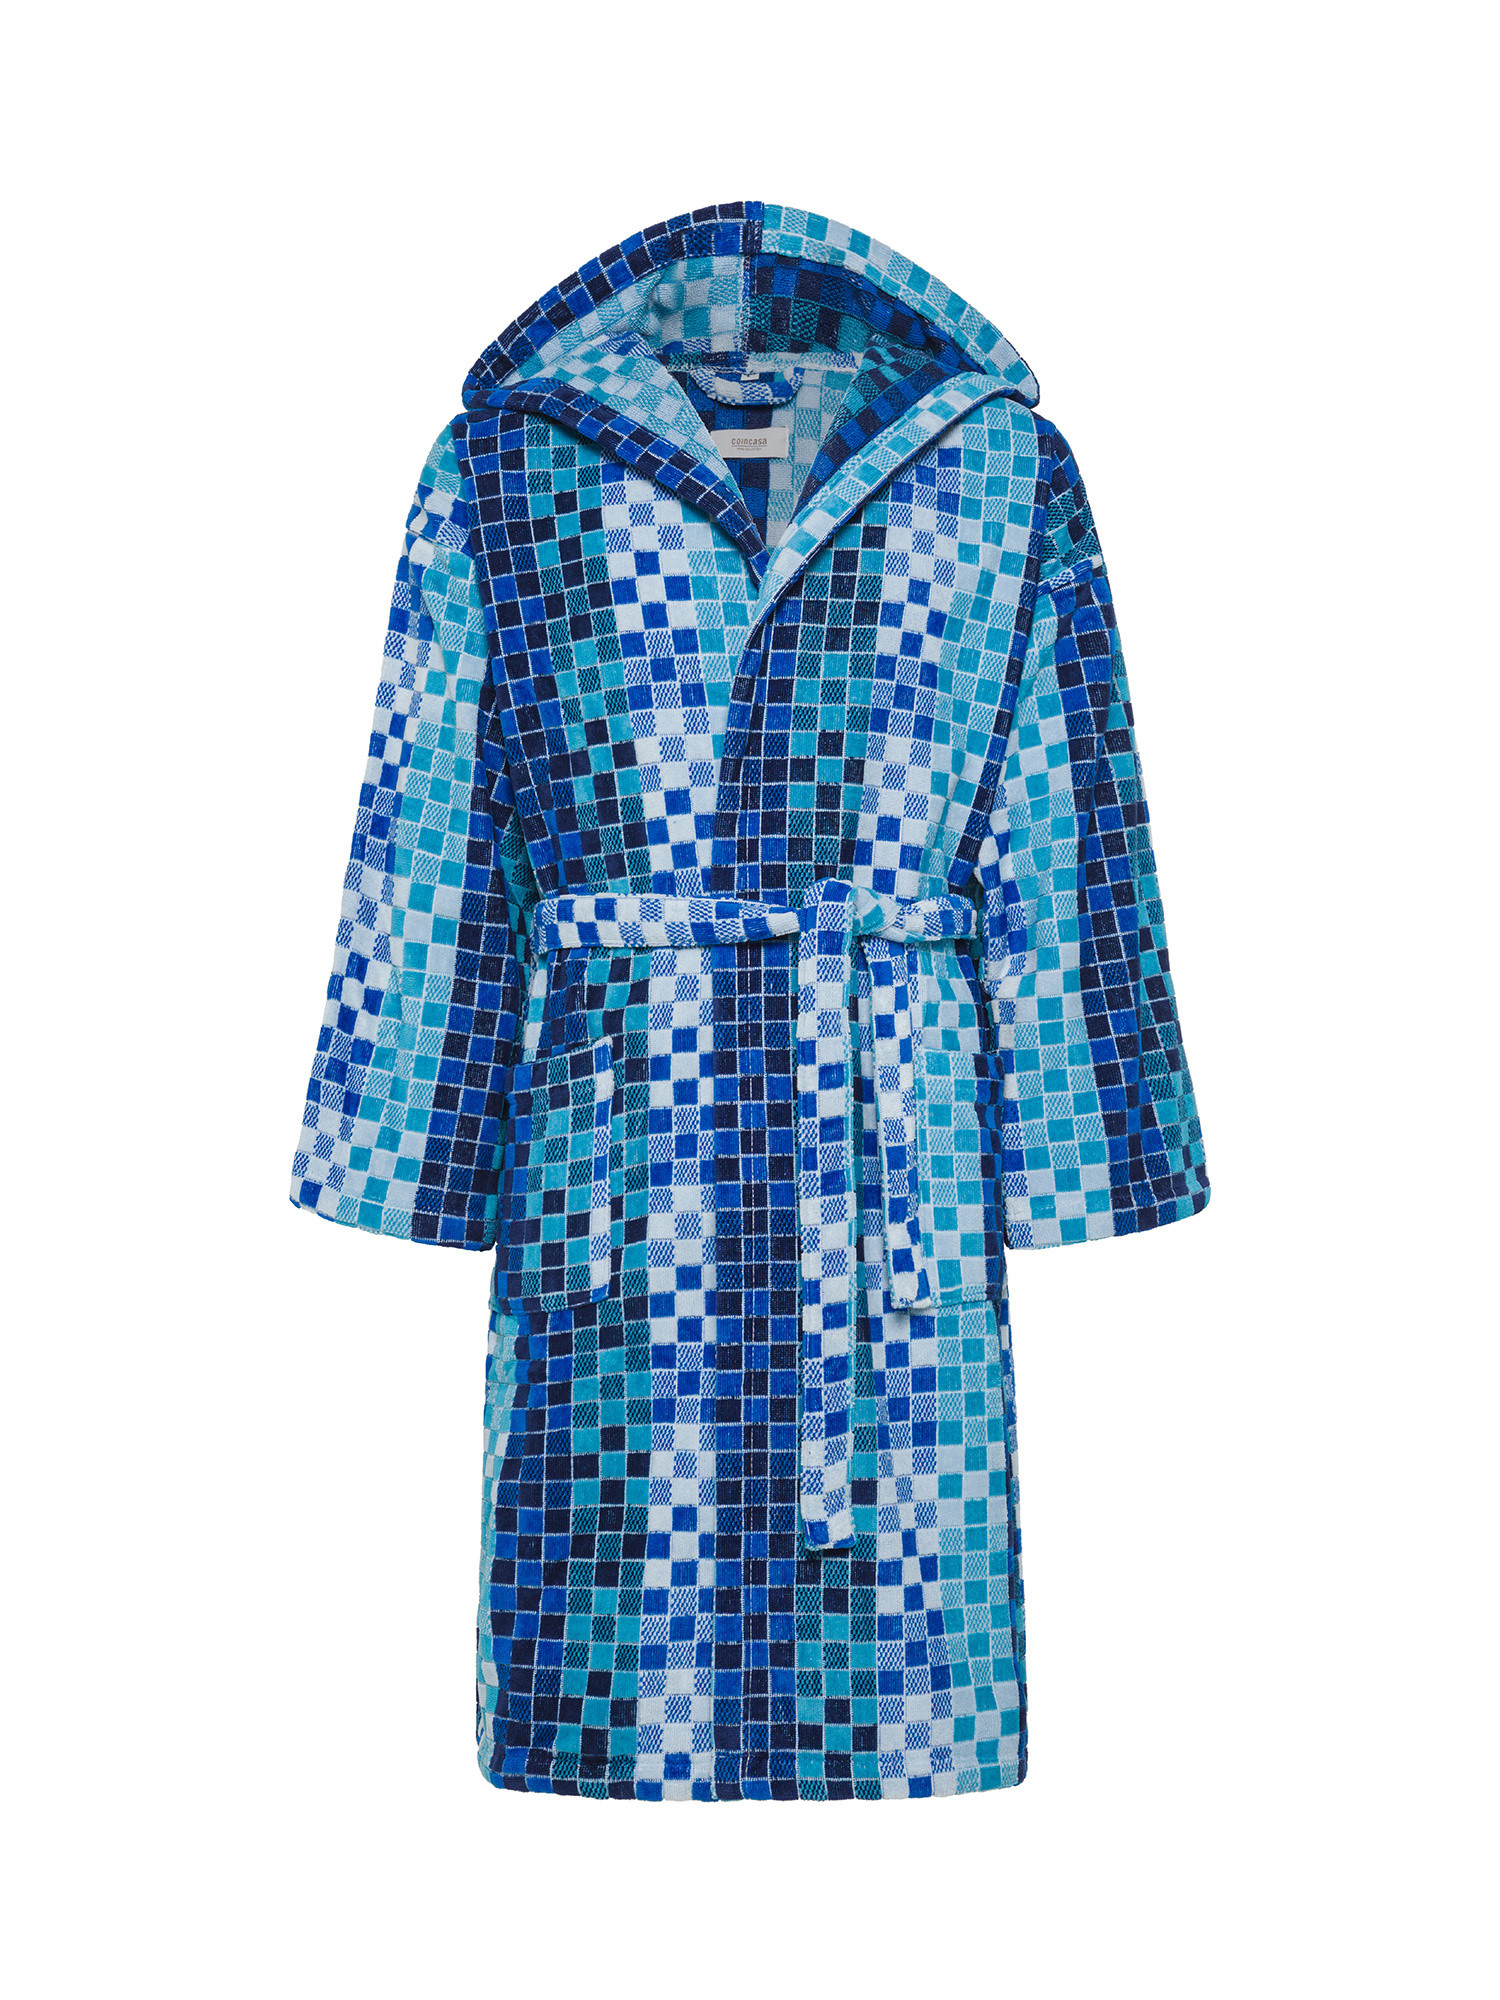 Mosaic effect cotton velour bathrobe, Blue, large image number 0